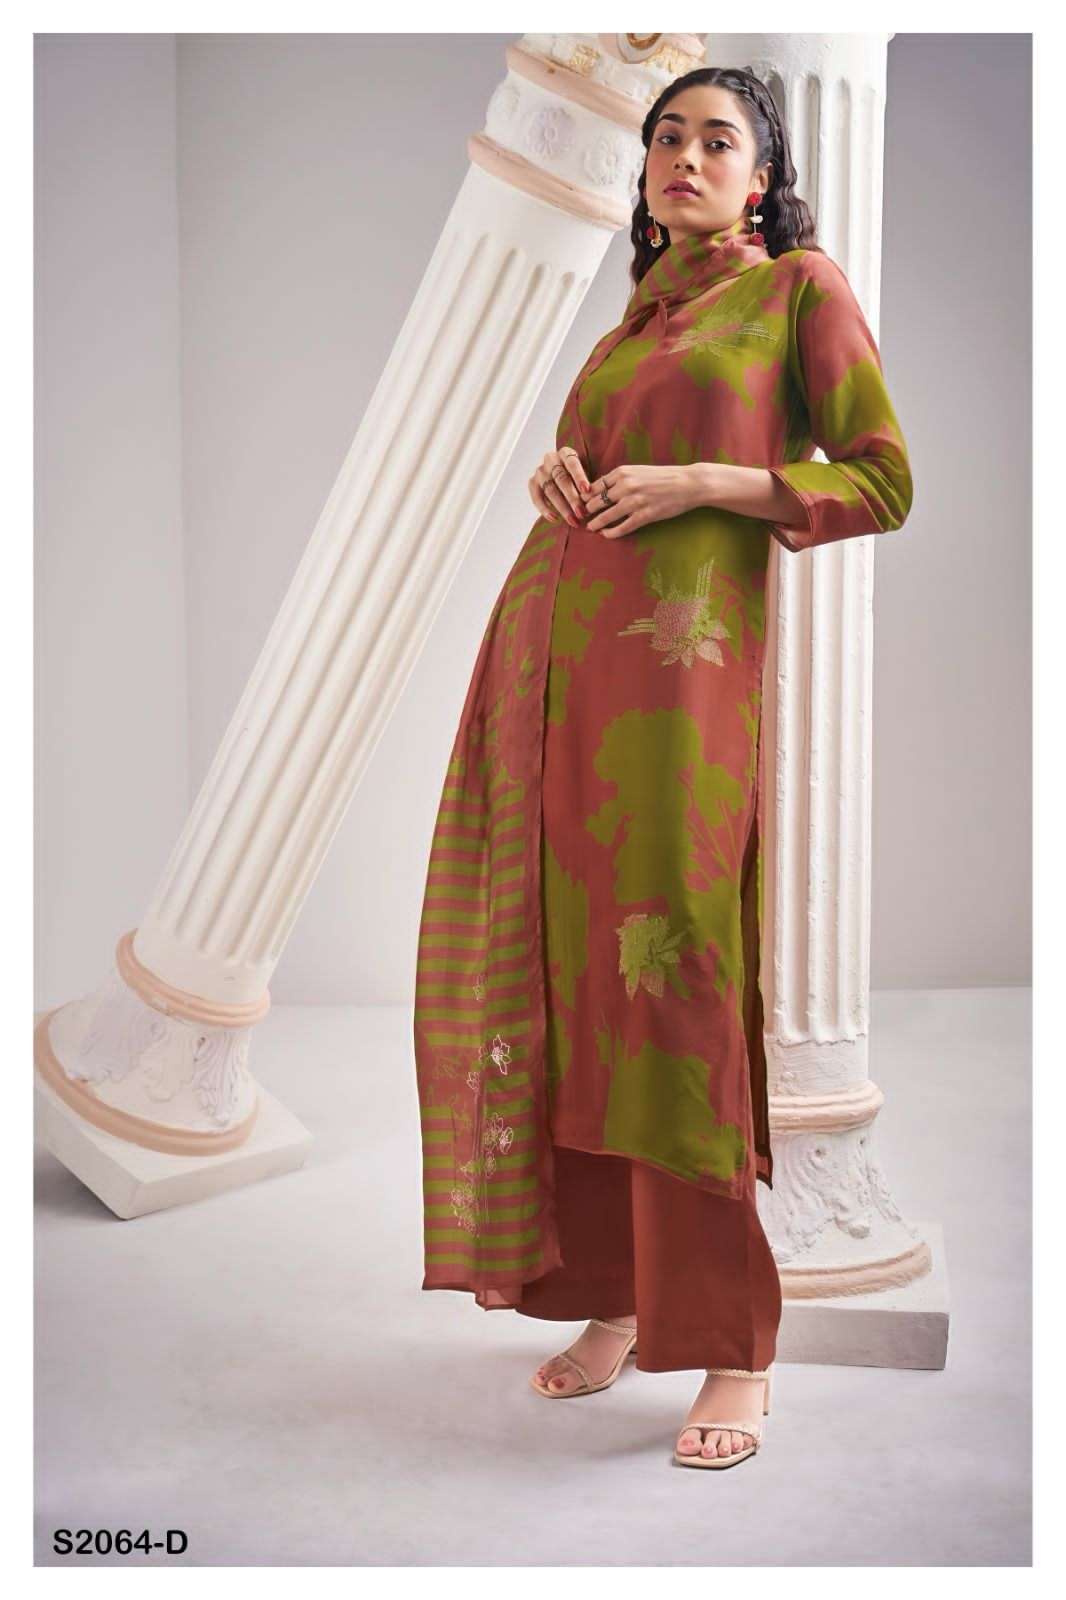 ganga villie 2064 colour series designer  pakistani salwar kameez wholesaler surat gujarat